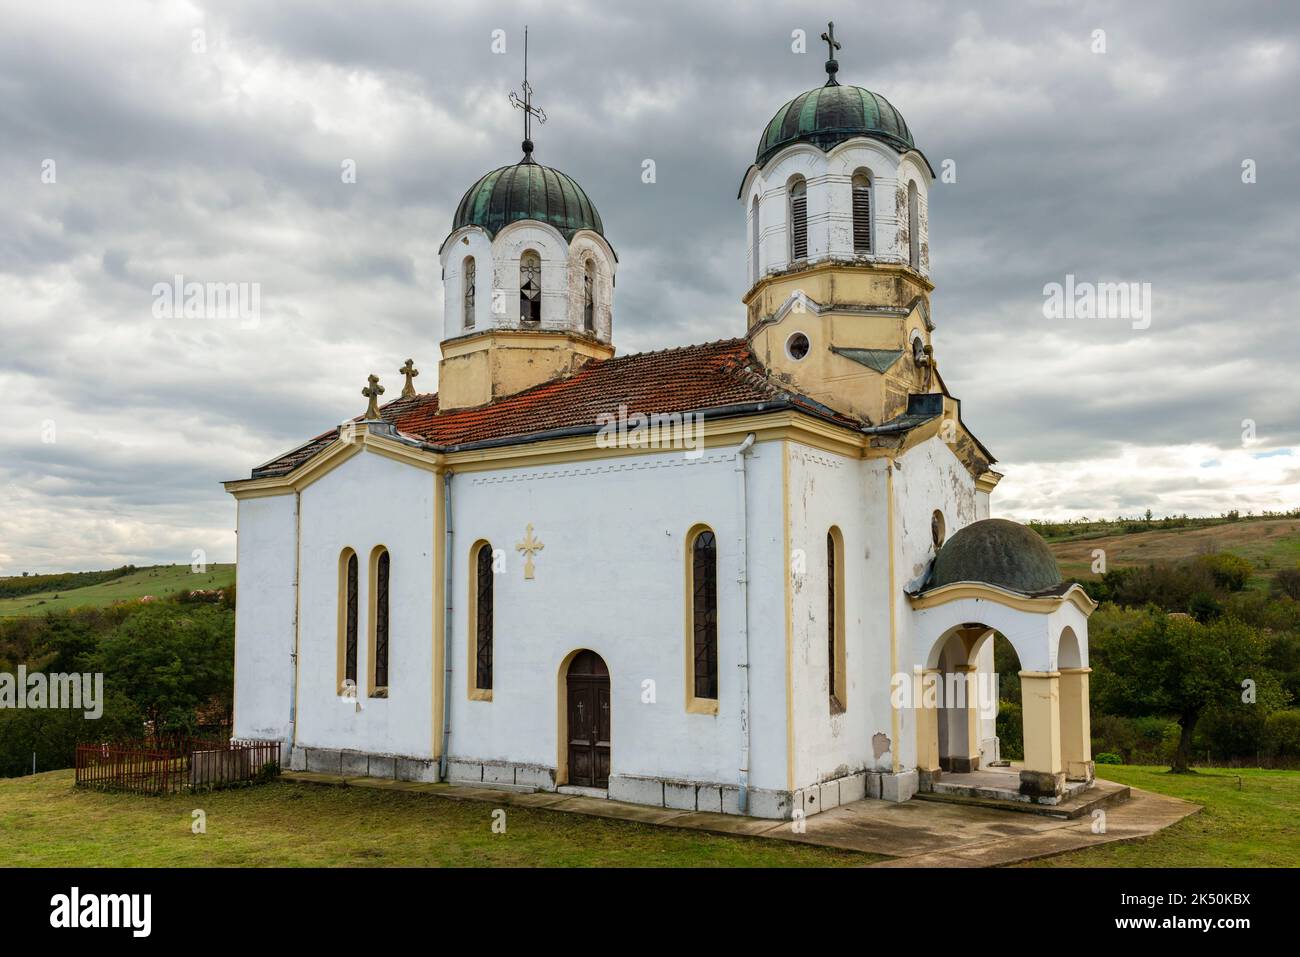 Chiesa ortodossa orientale nella Bulgaria rurale, Europa orientale, Balcani, UE Foto Stock